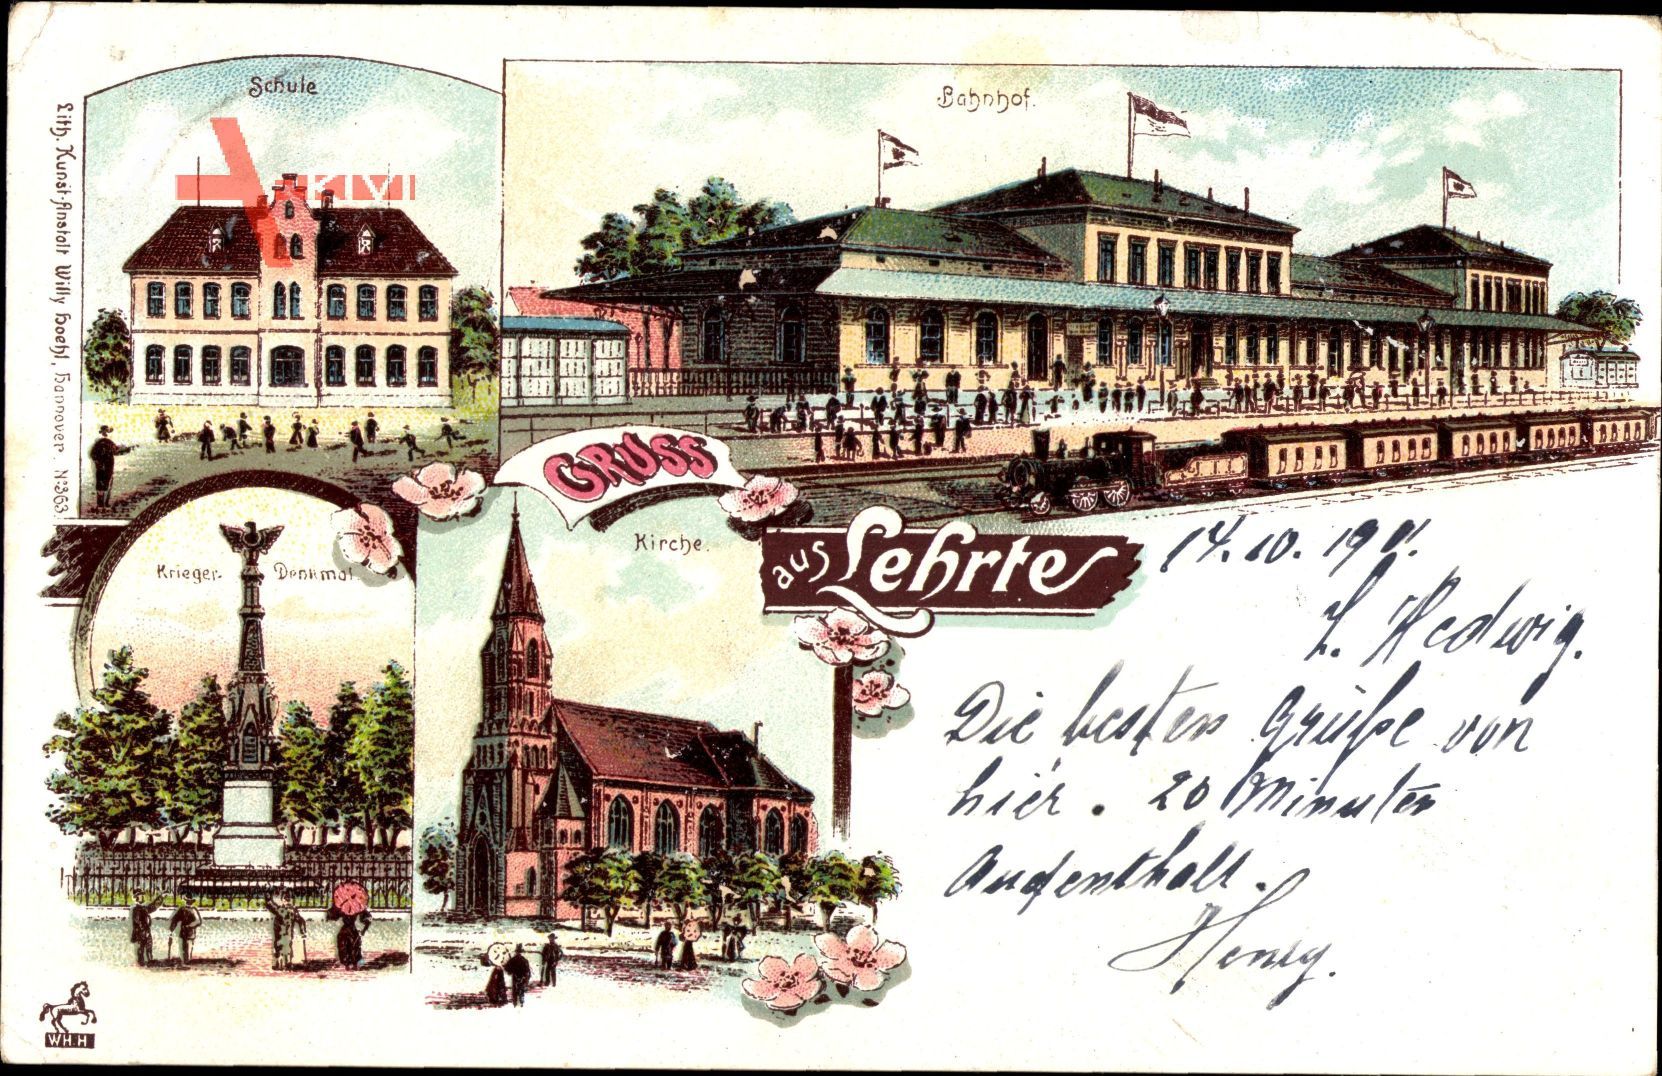 Lehrte in Niedersachsen, Bahnhof, Schule, Kirche, Krieger Denkmal